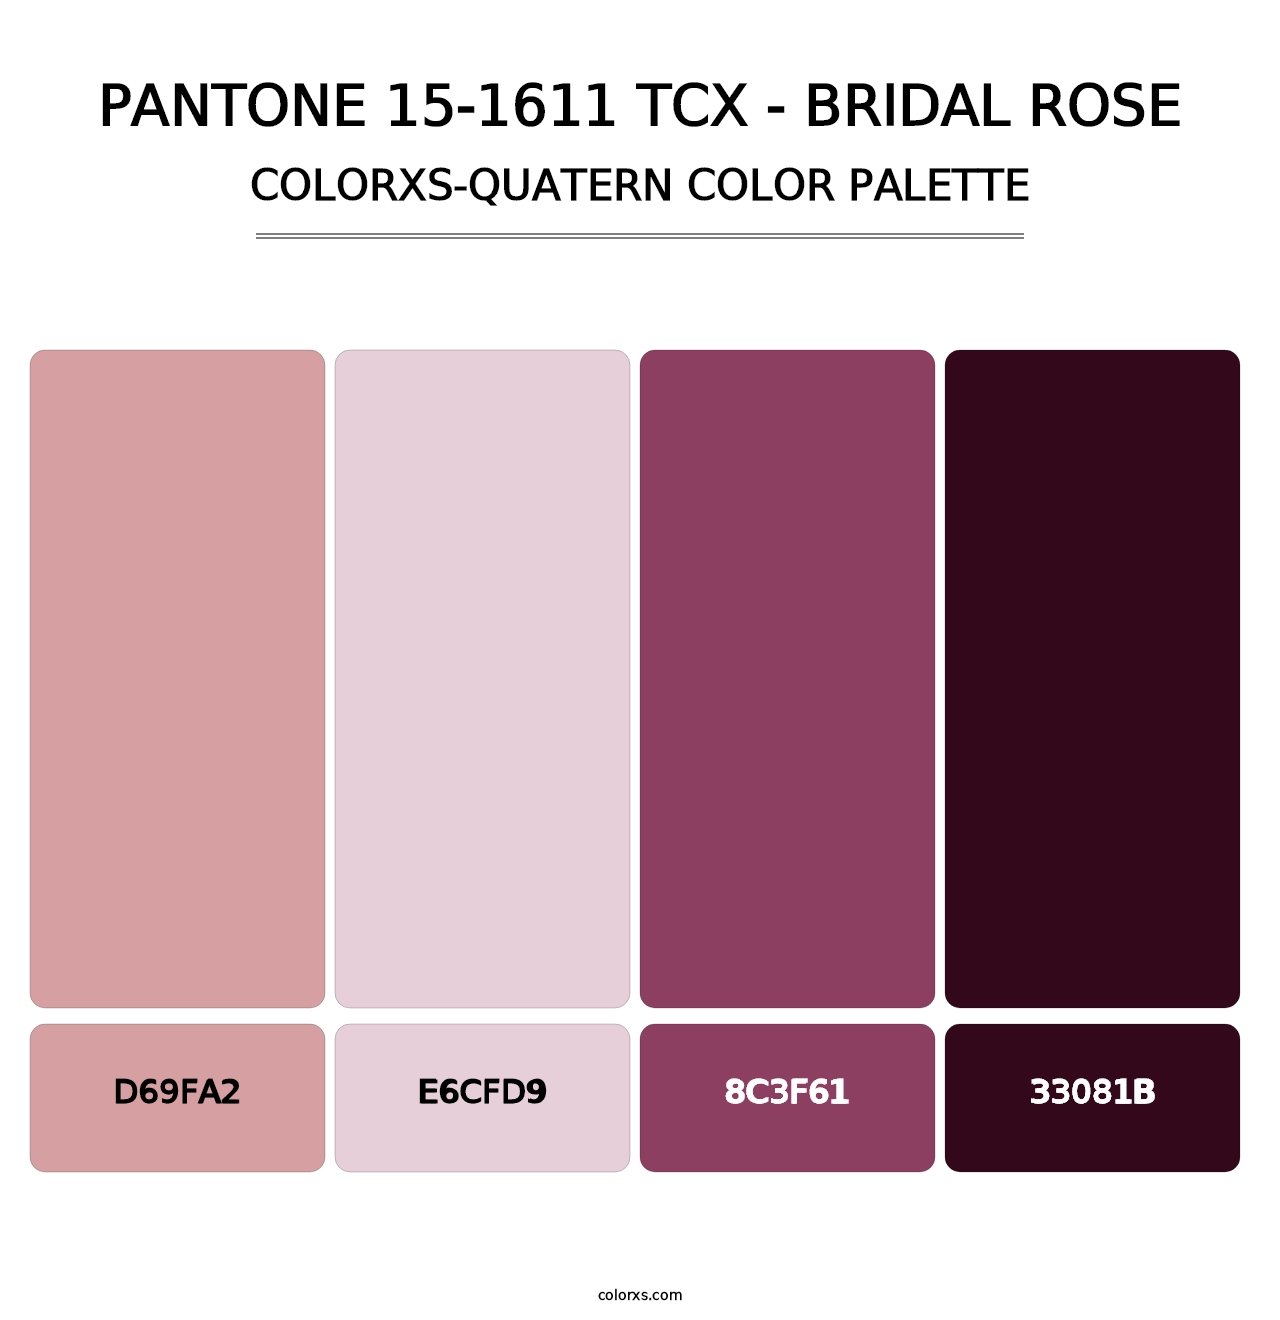 PANTONE 15-1611 TCX - Bridal Rose - Colorxs Quatern Palette